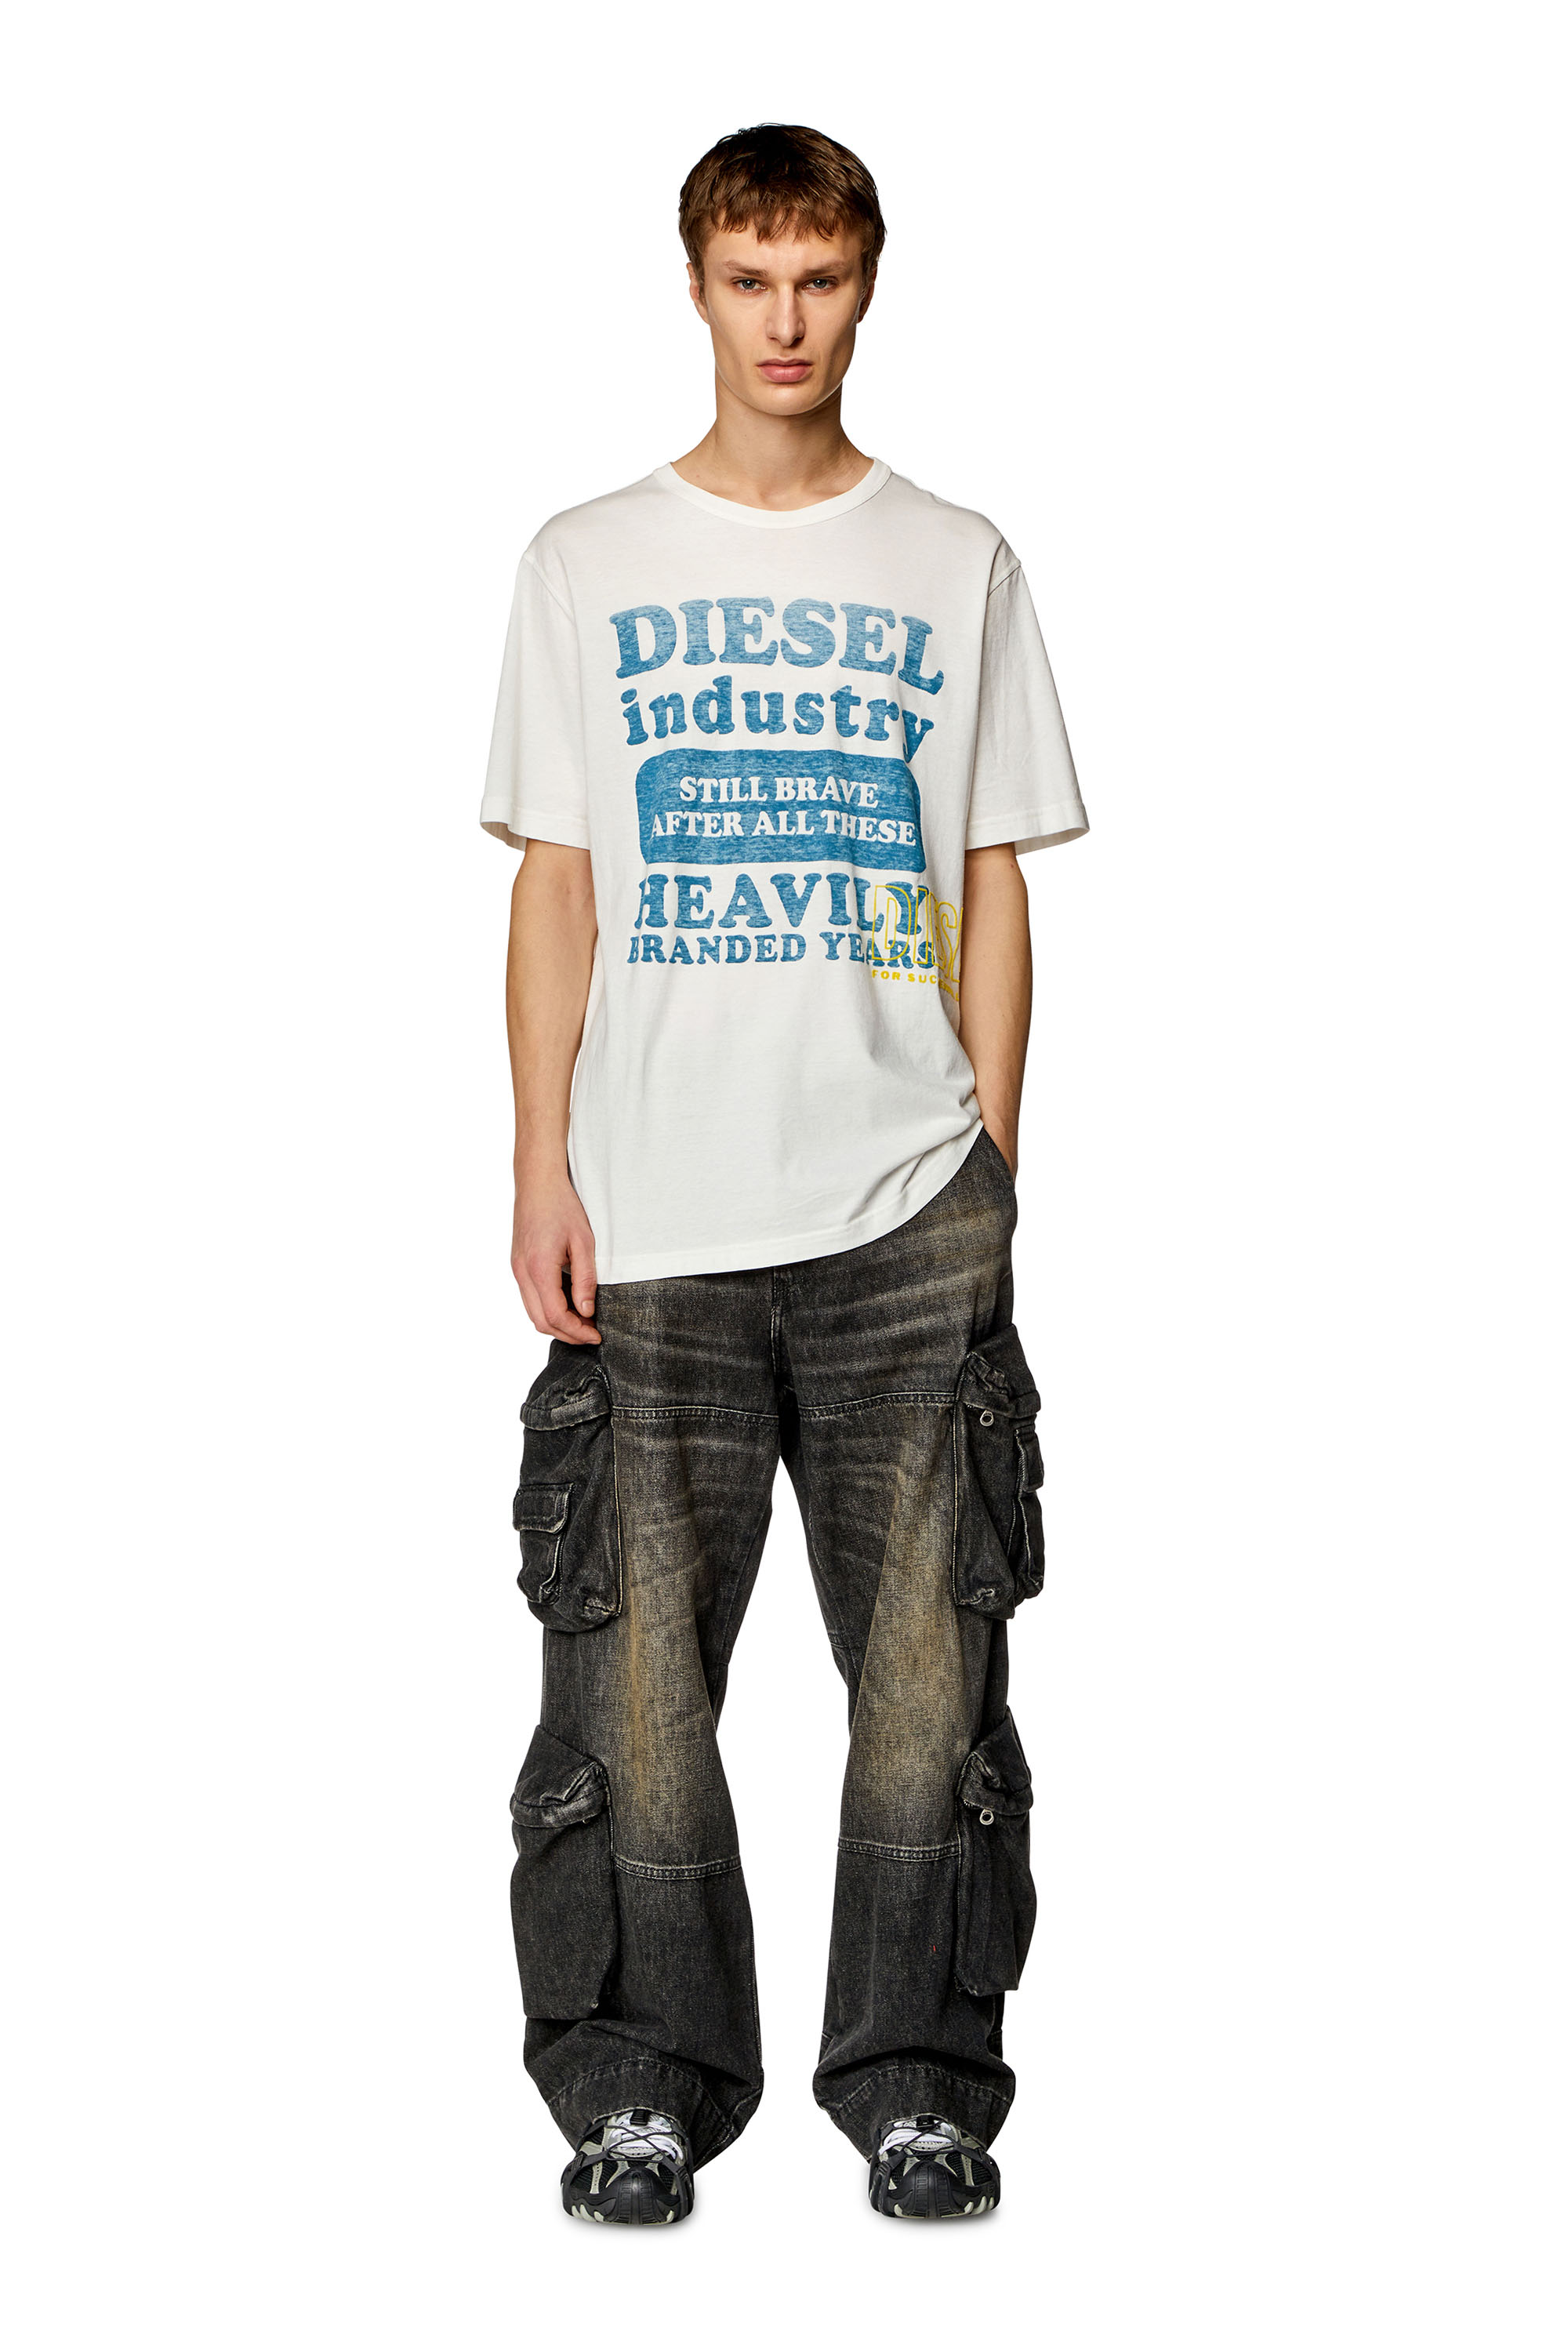 Diesel - T-JUST-N9, Homme T-shirt avec logo imprimé inside-out in Blanc - Image 3